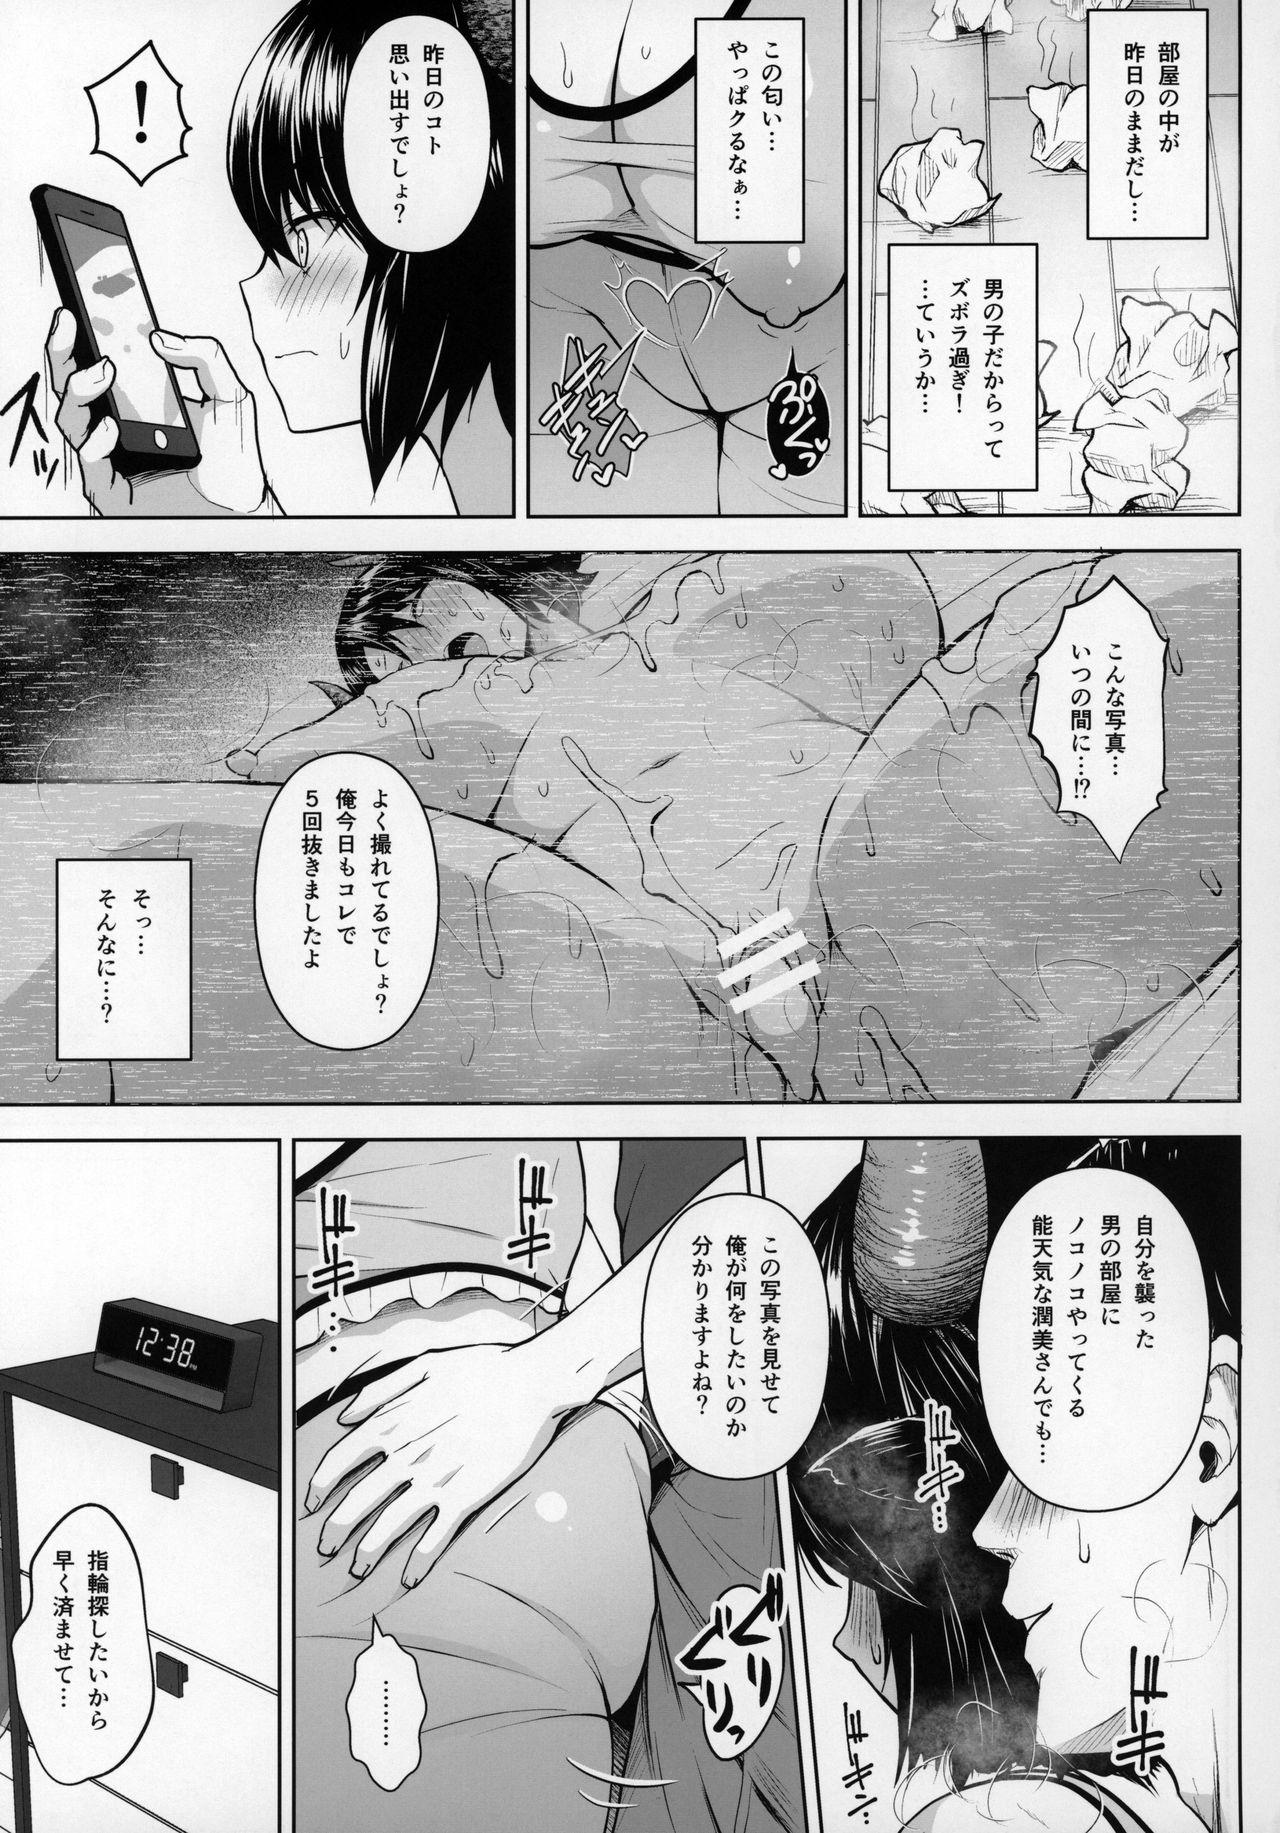 Couch Oku-san no Oppai ga Dekasugiru no ga Warui! 2 - Touhou project Hardsex - Page 4